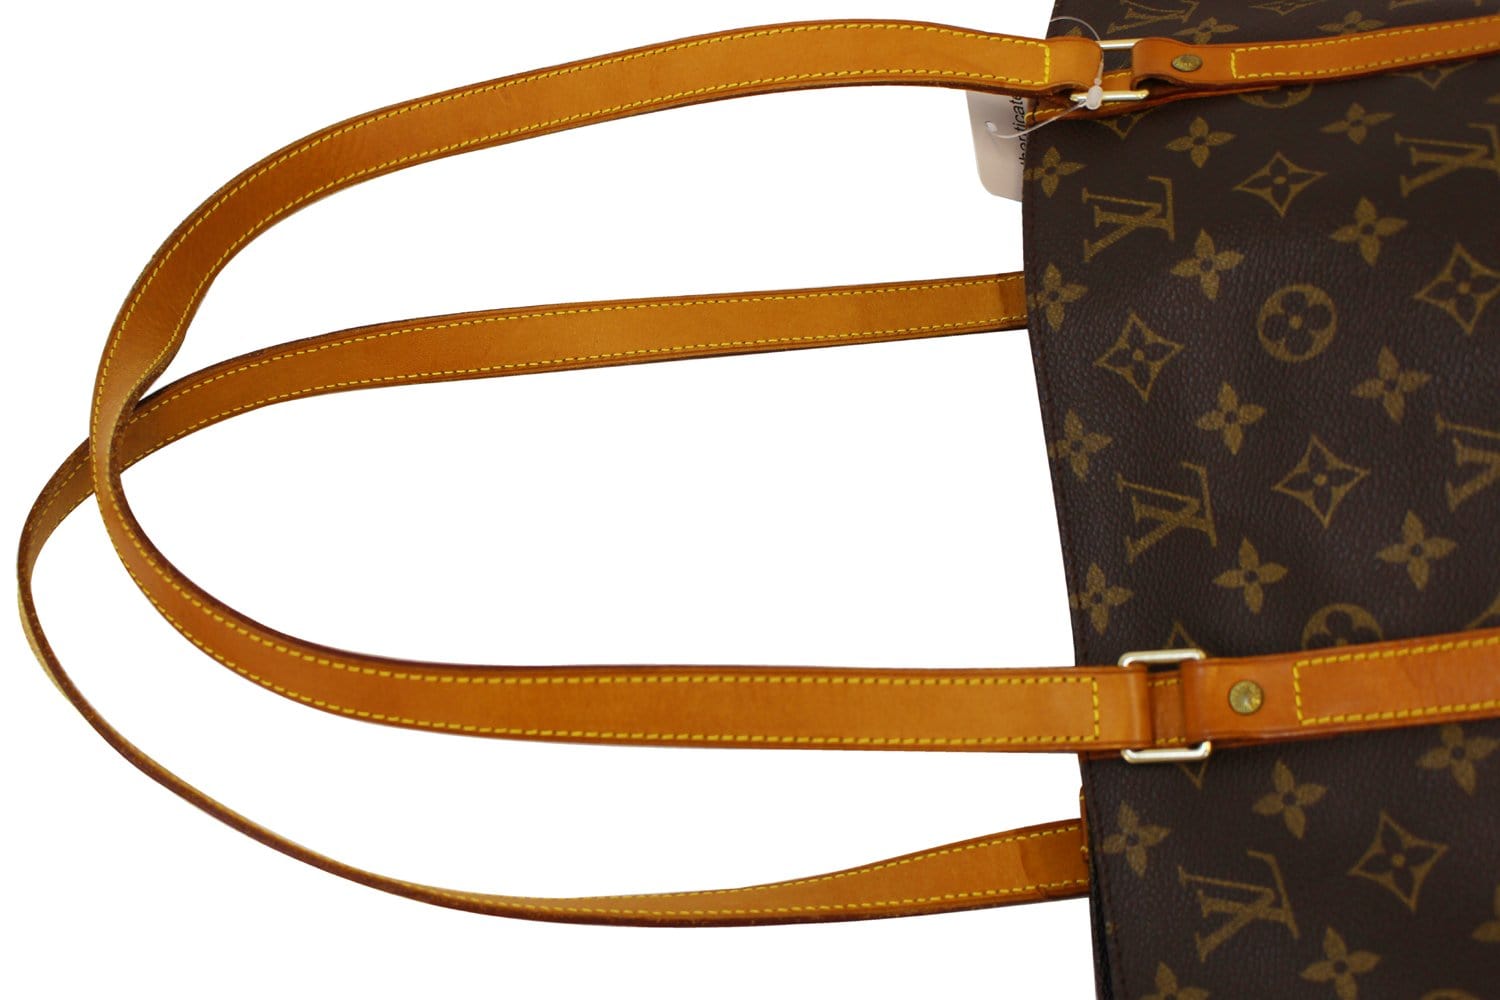 Discontinued Bag #7: Louis Vuitton Monogram Sac Shopping Large Tote